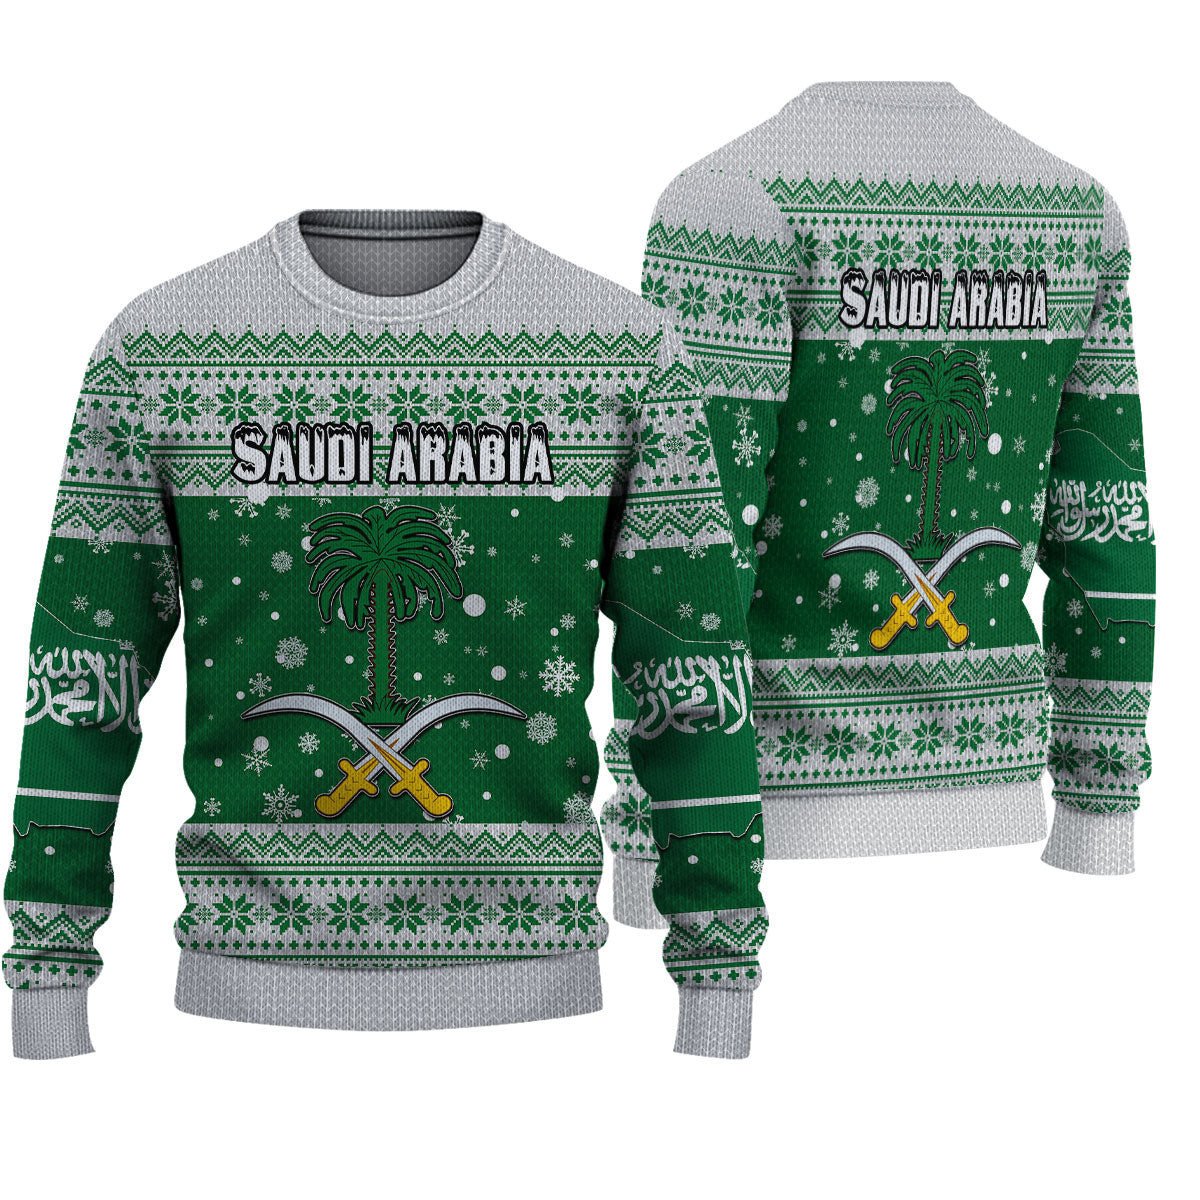 wonder-print-shop-ugly-sweater-saudi-arabia-christmas-knitted-sweater